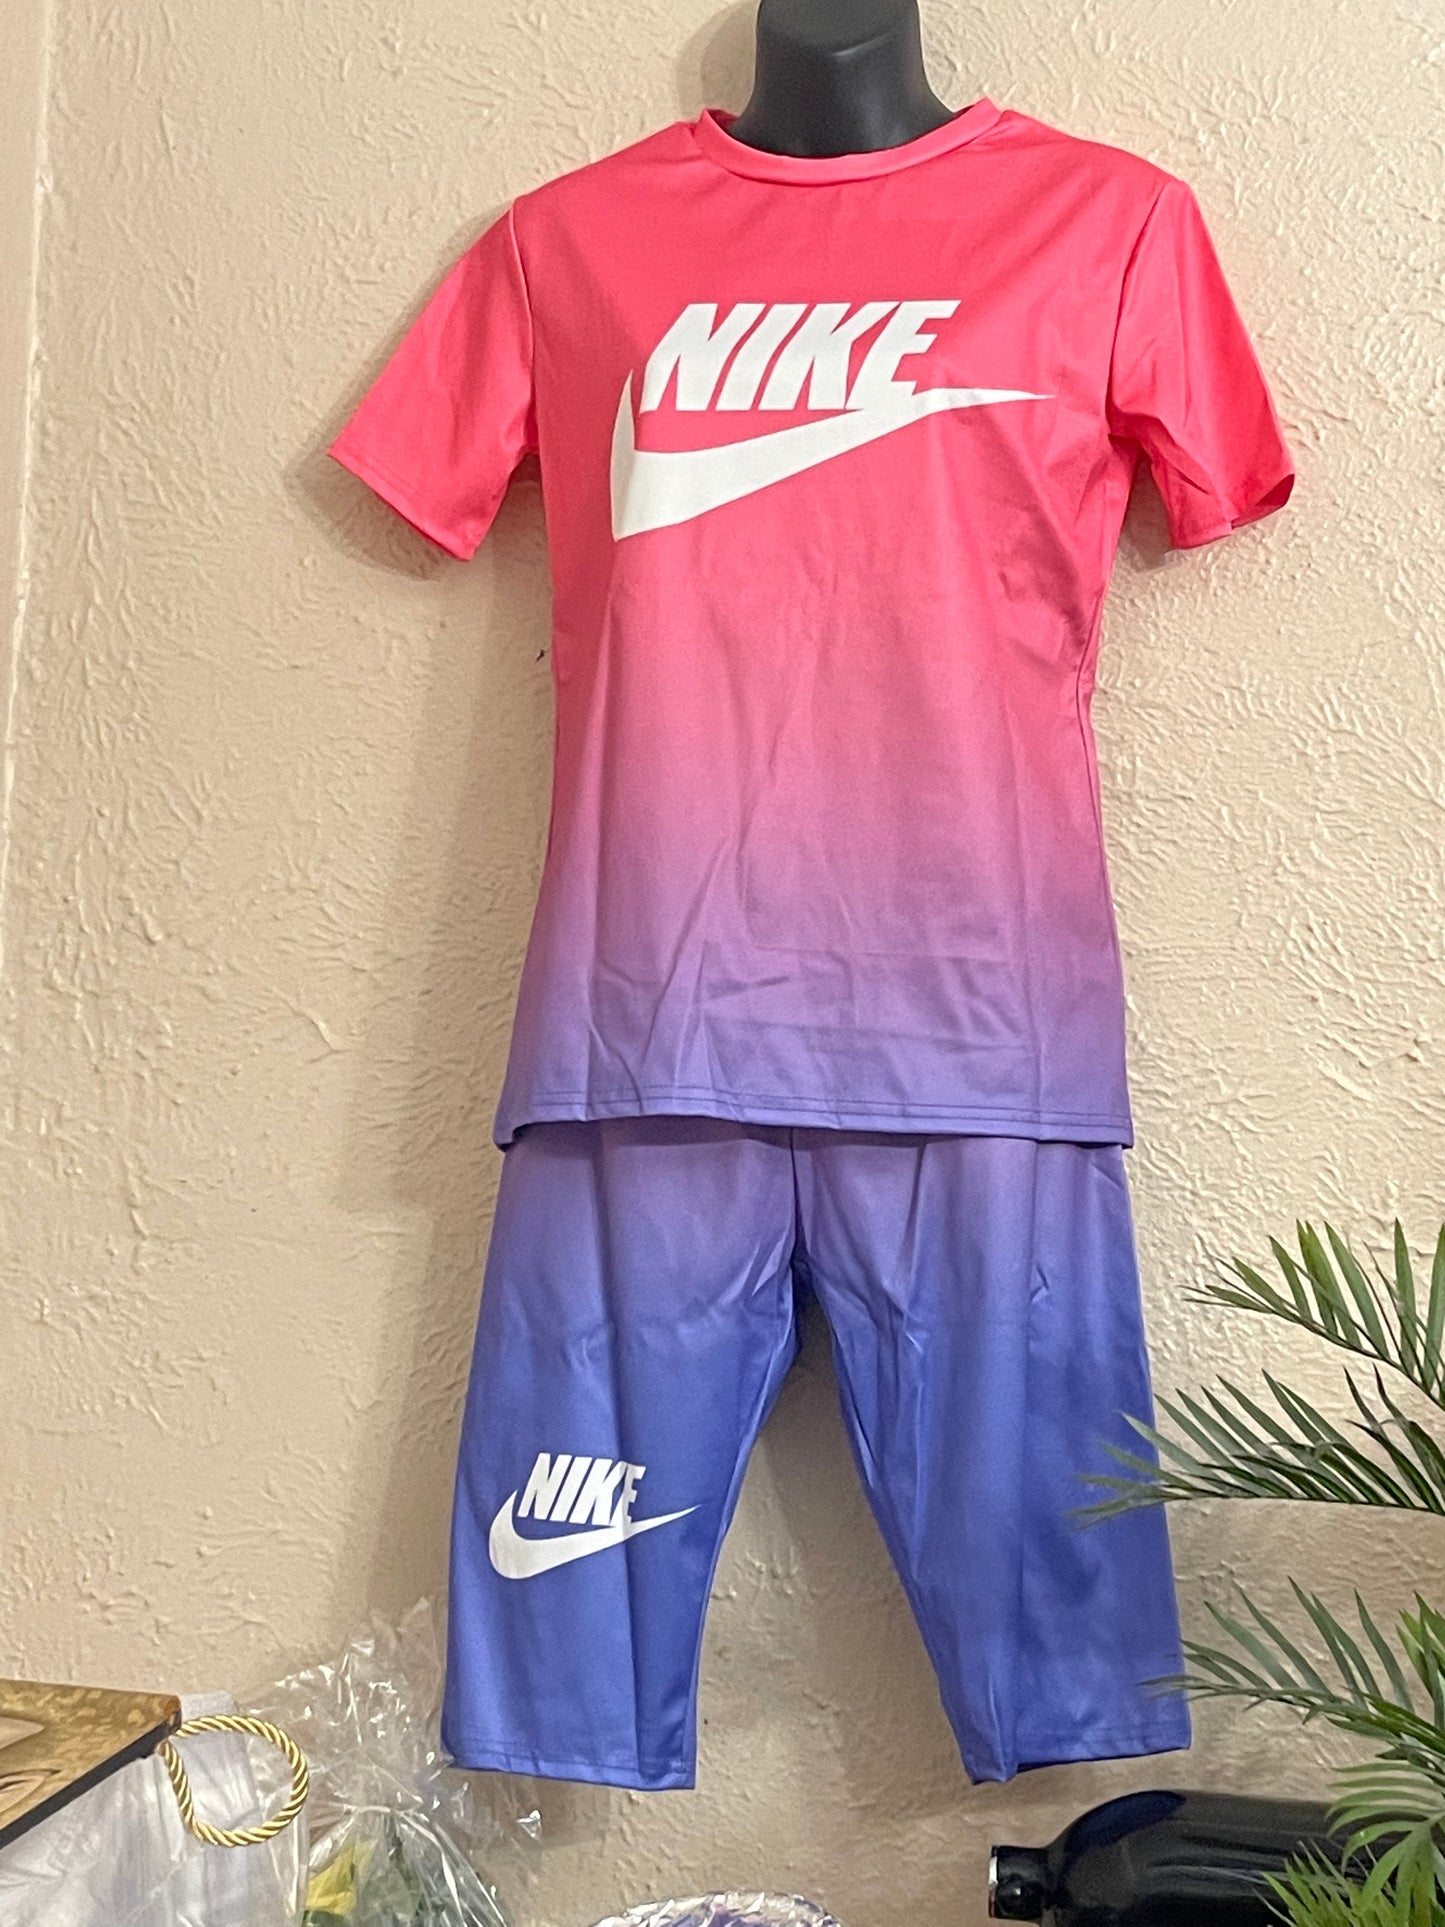 Nike Ombré Inspired Shorts Sets